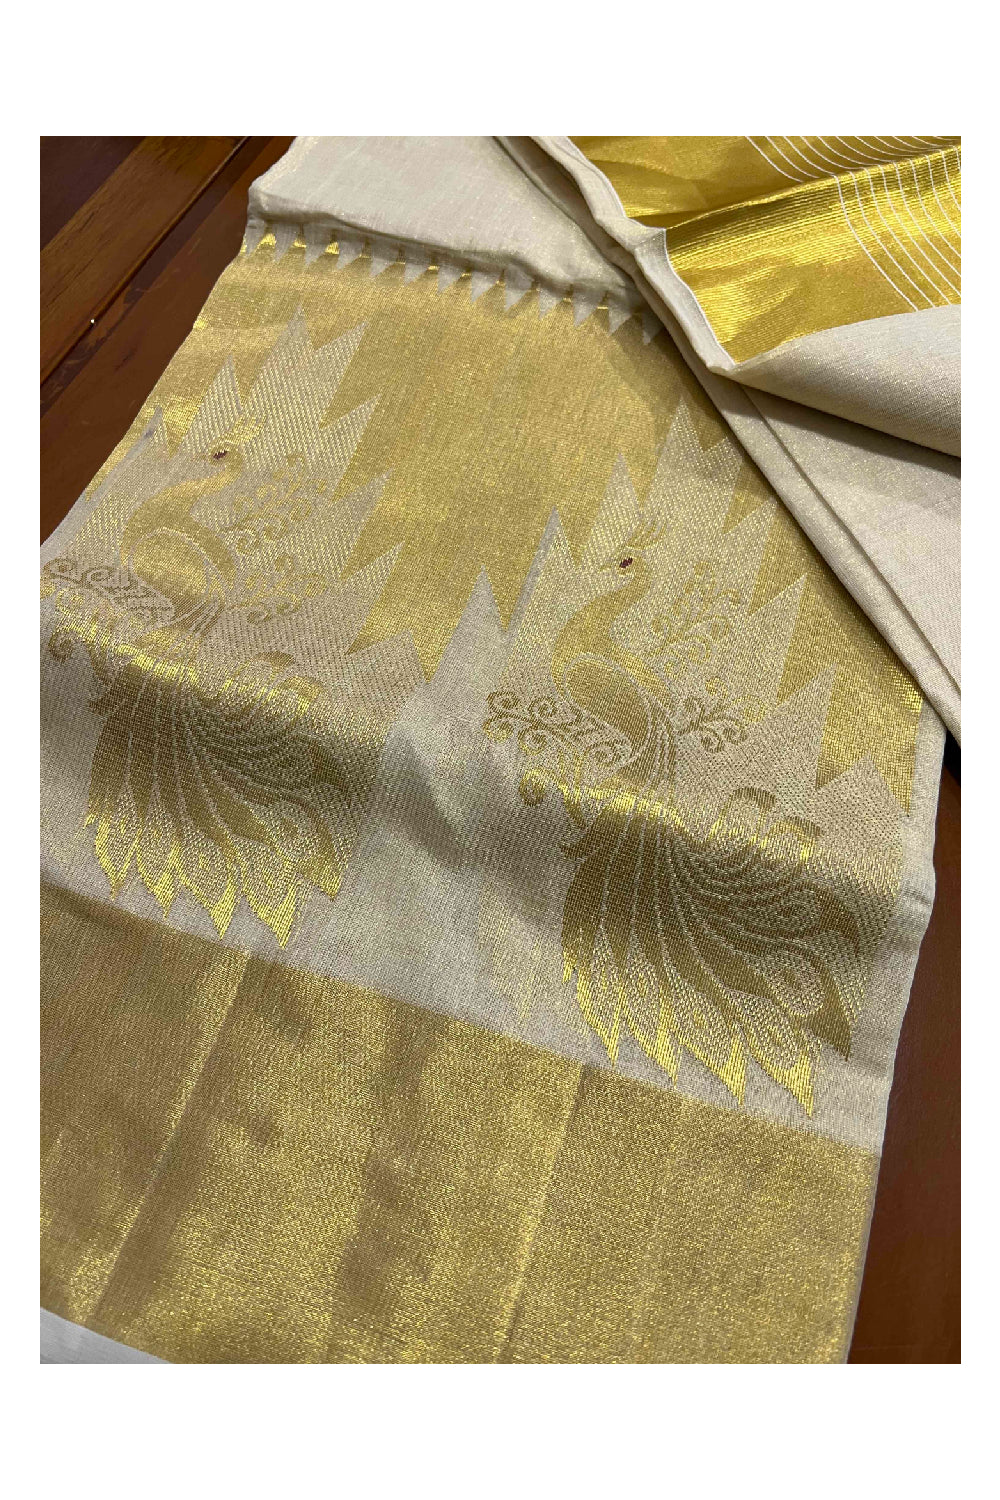 Southloom Premium Kuthampully Handloom Tissue Heavy Work Saree with Peacock Motifs